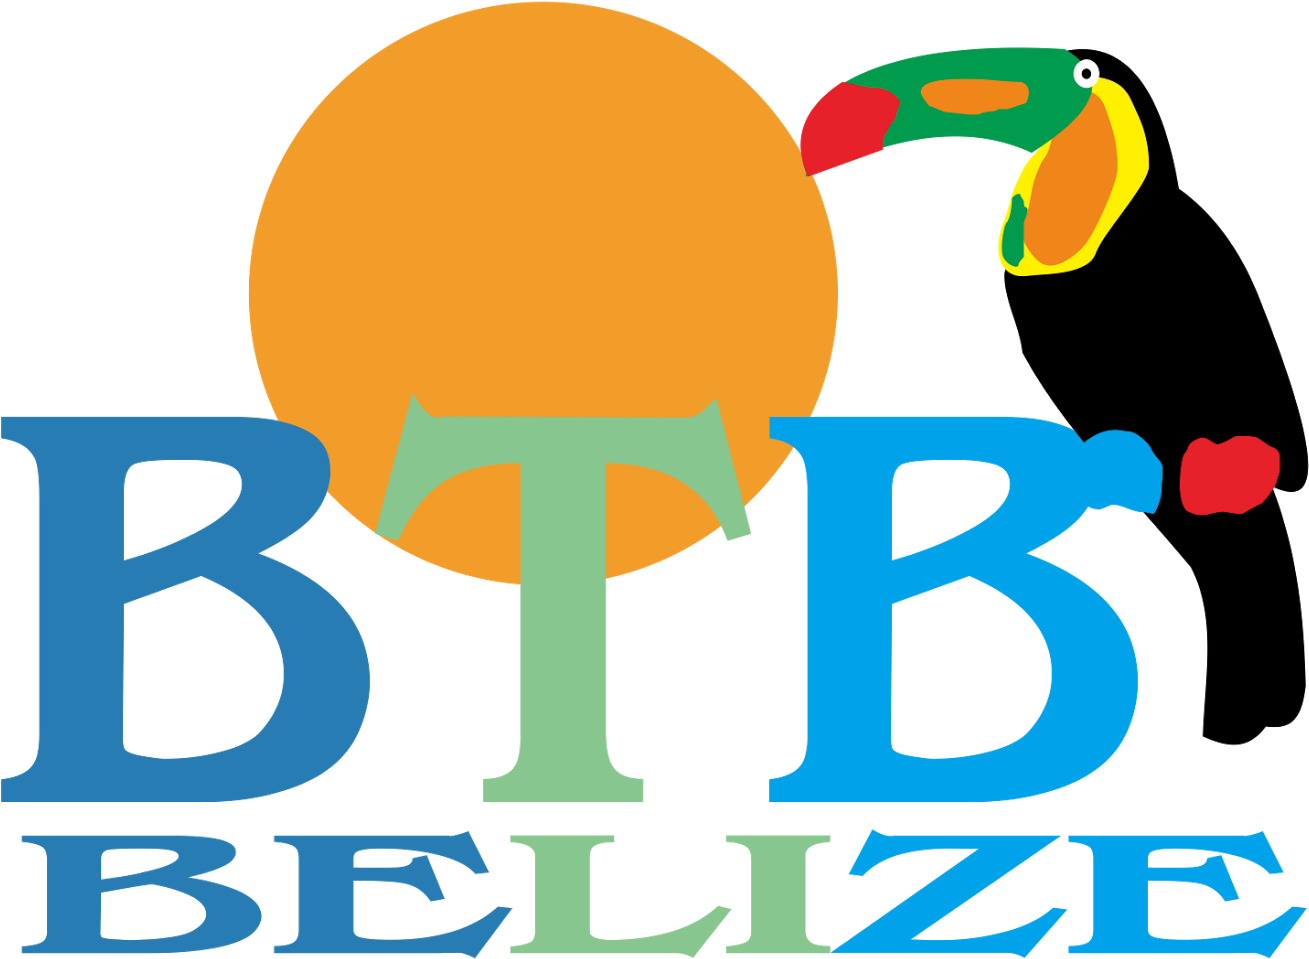 Btb Belize Logo Vector - Belize (1600x1136)